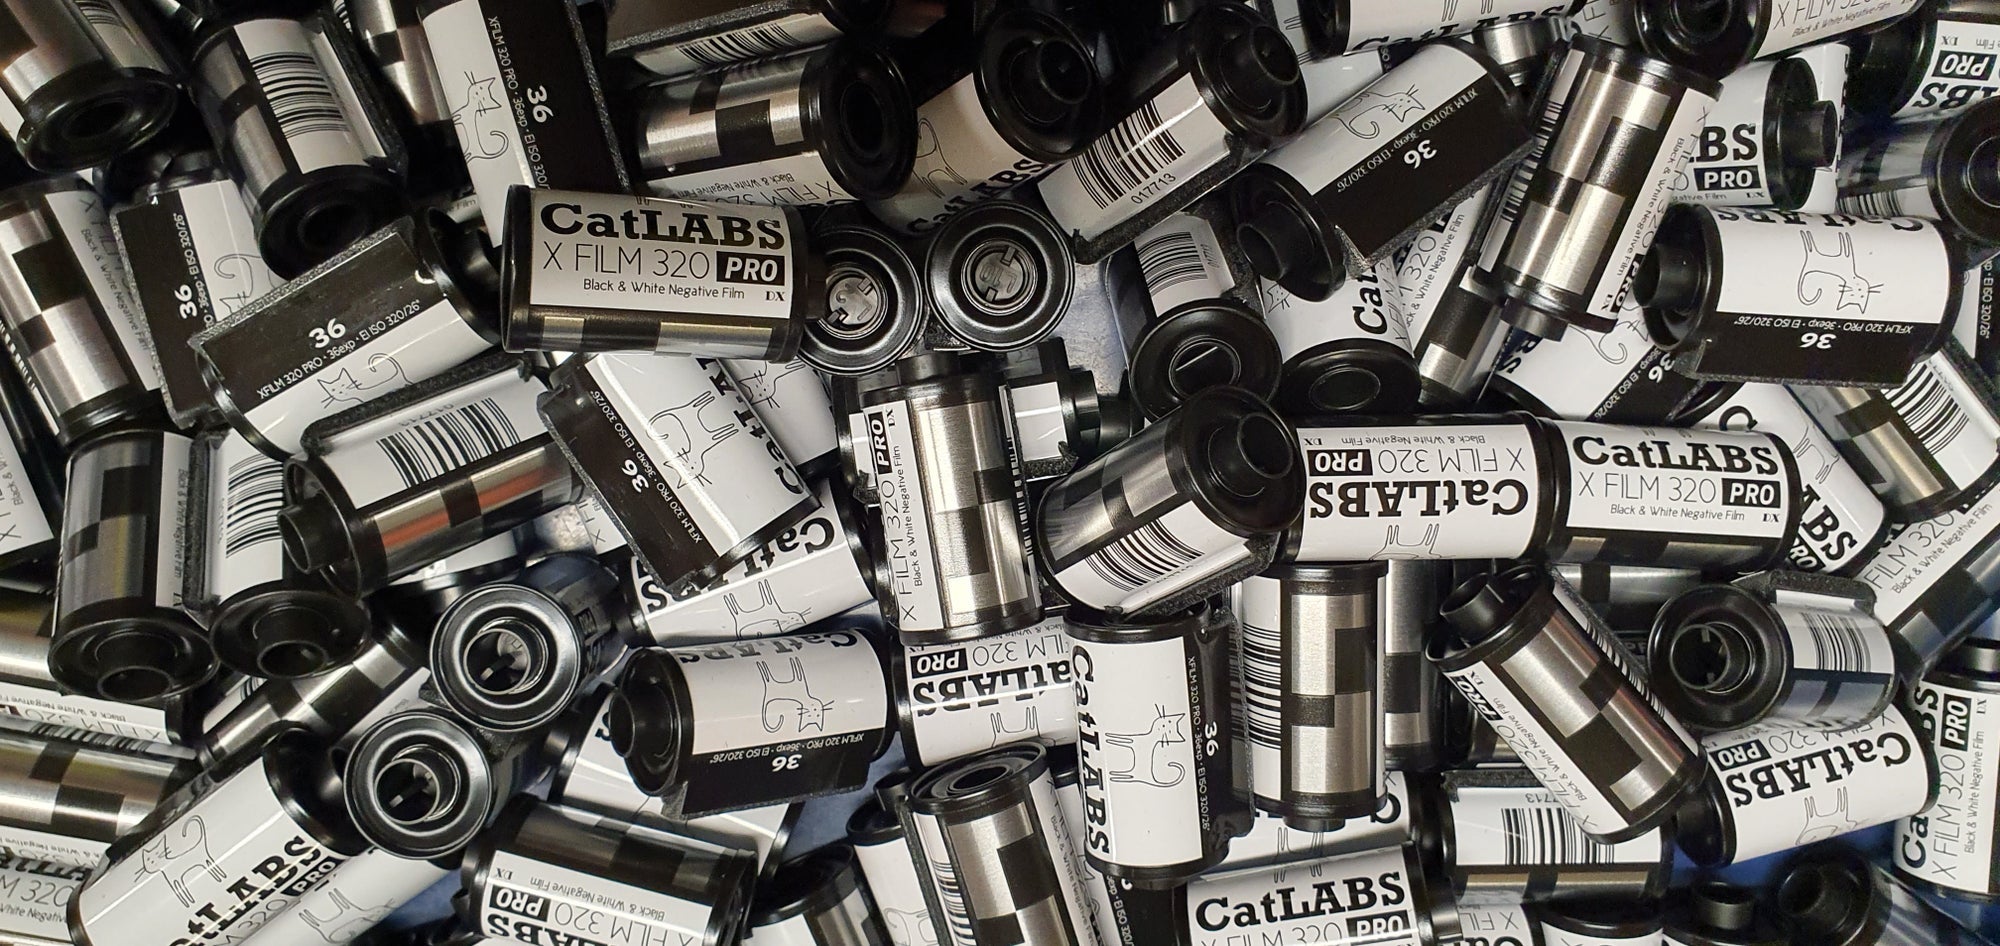 Rolls of CatLABS new ISO 320 B&W film stock